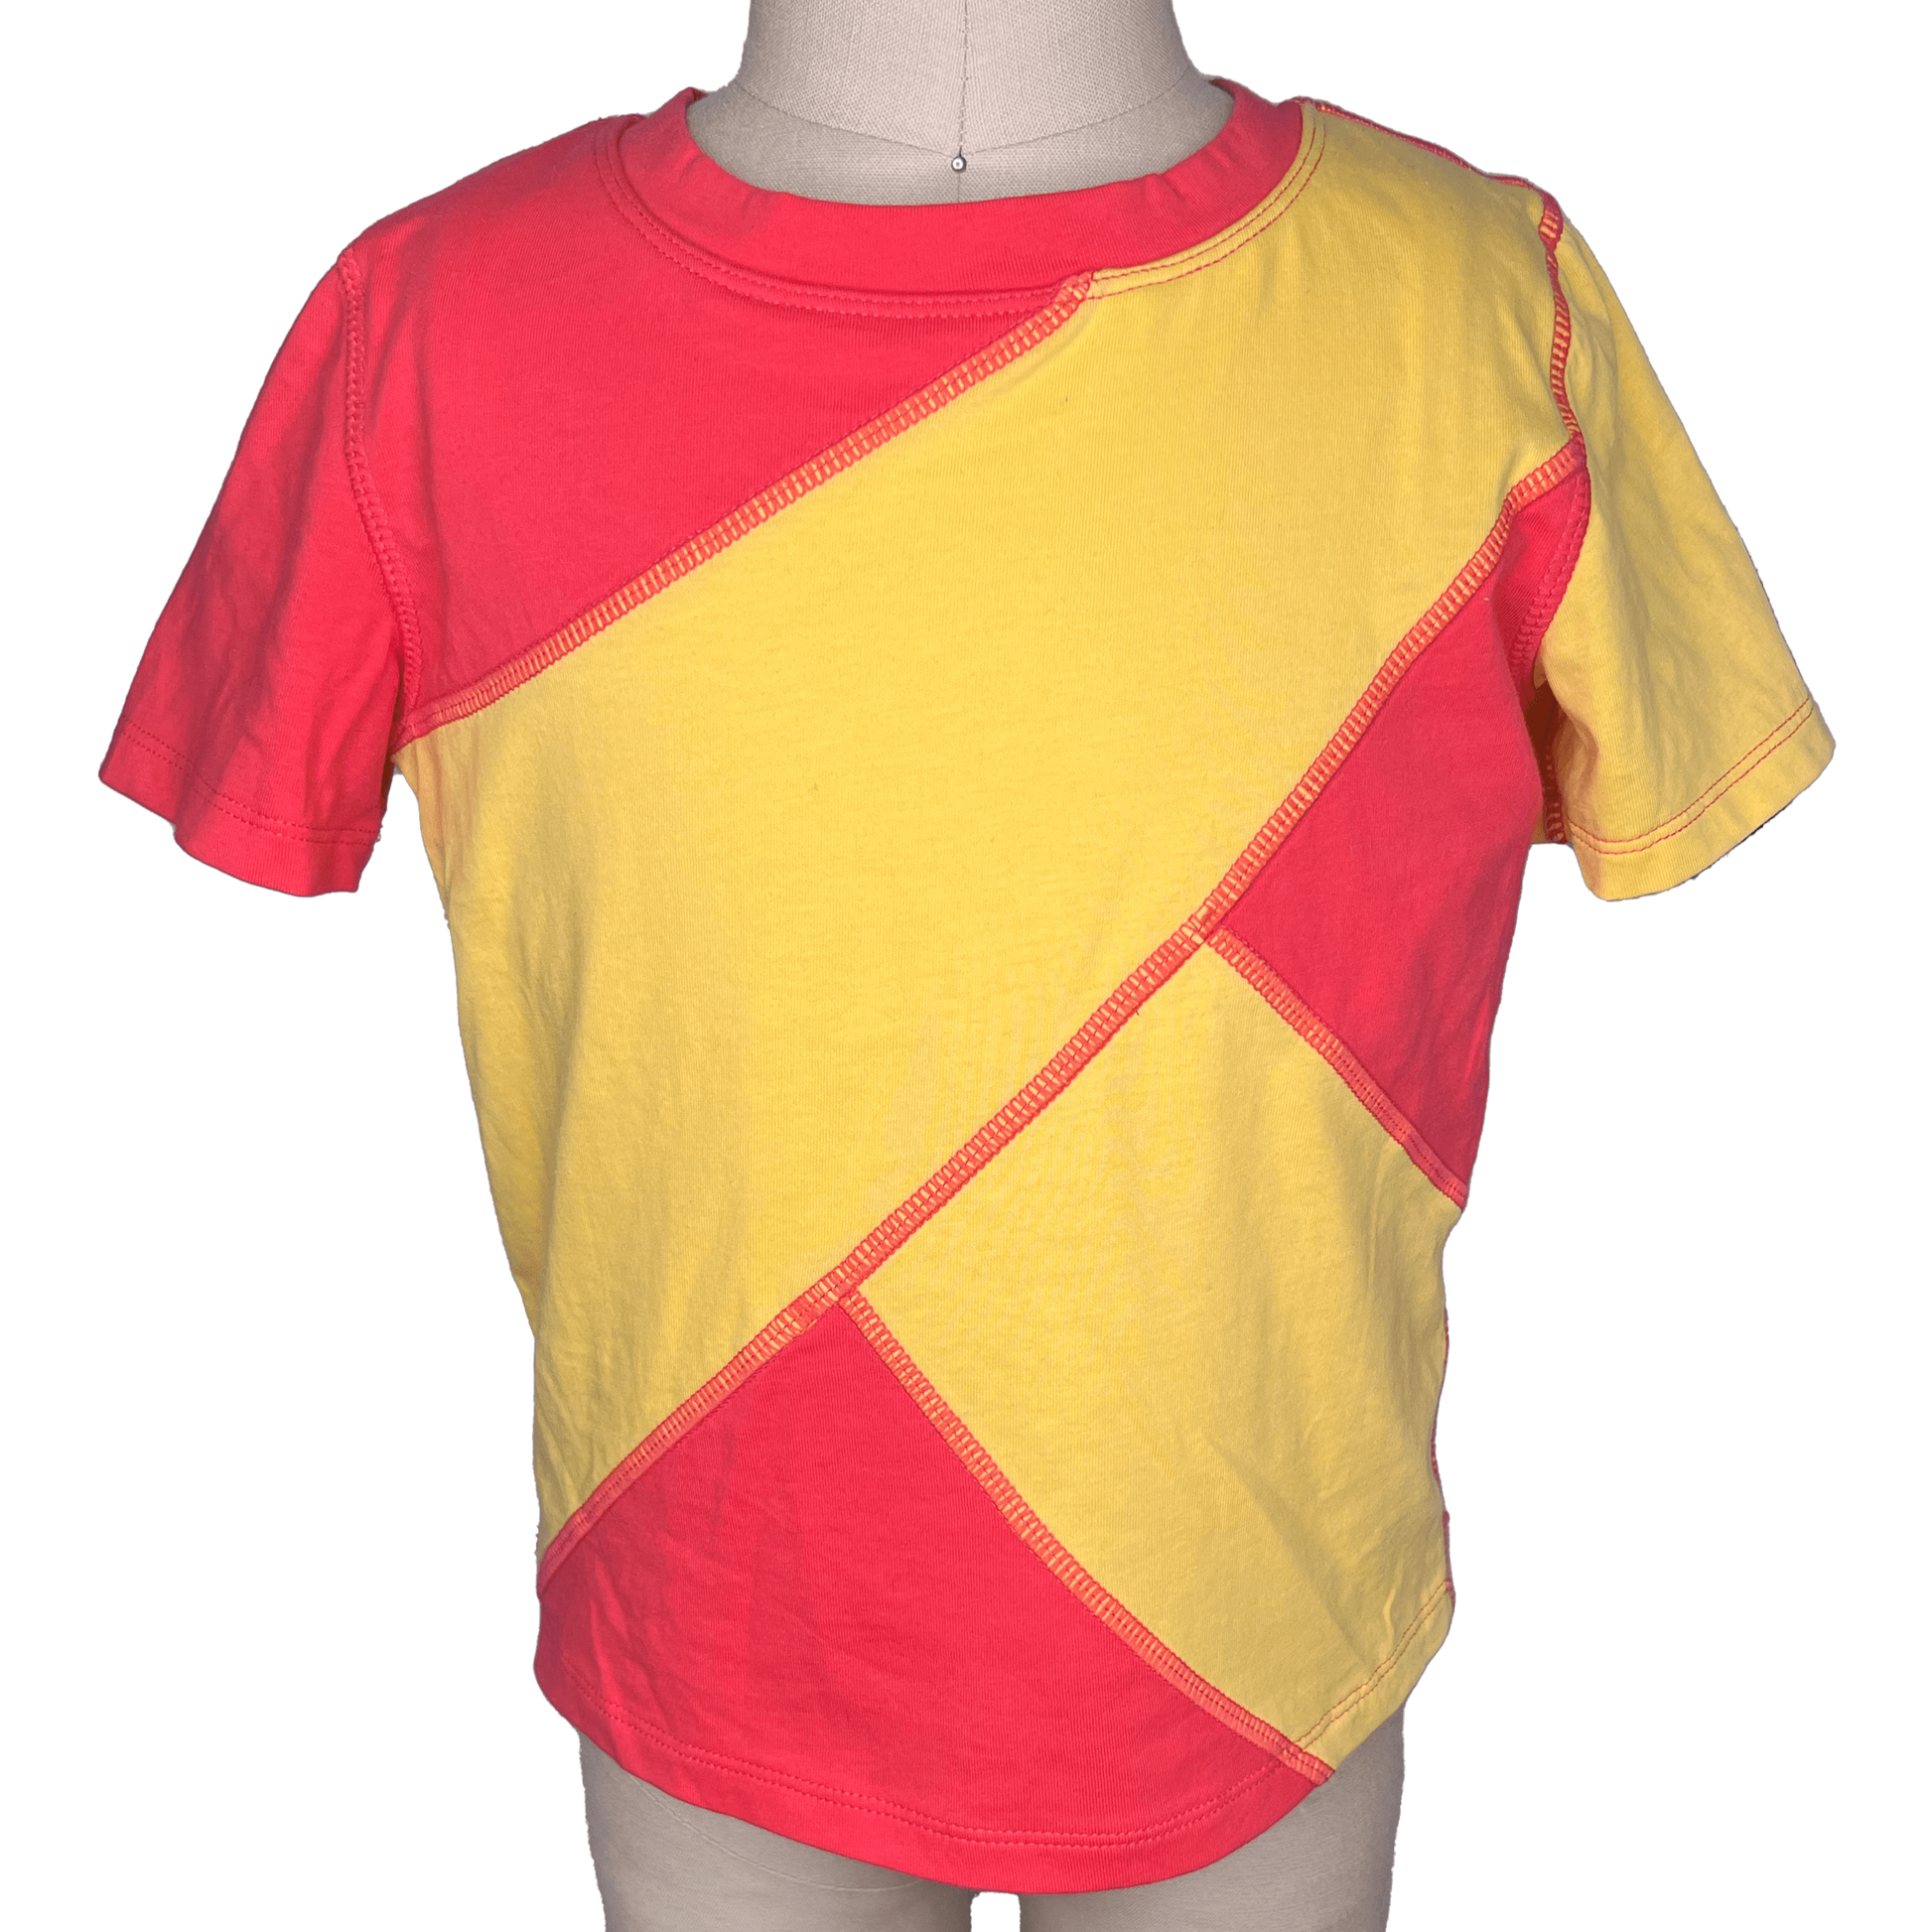 Colorful compression shirt (compression underneath)